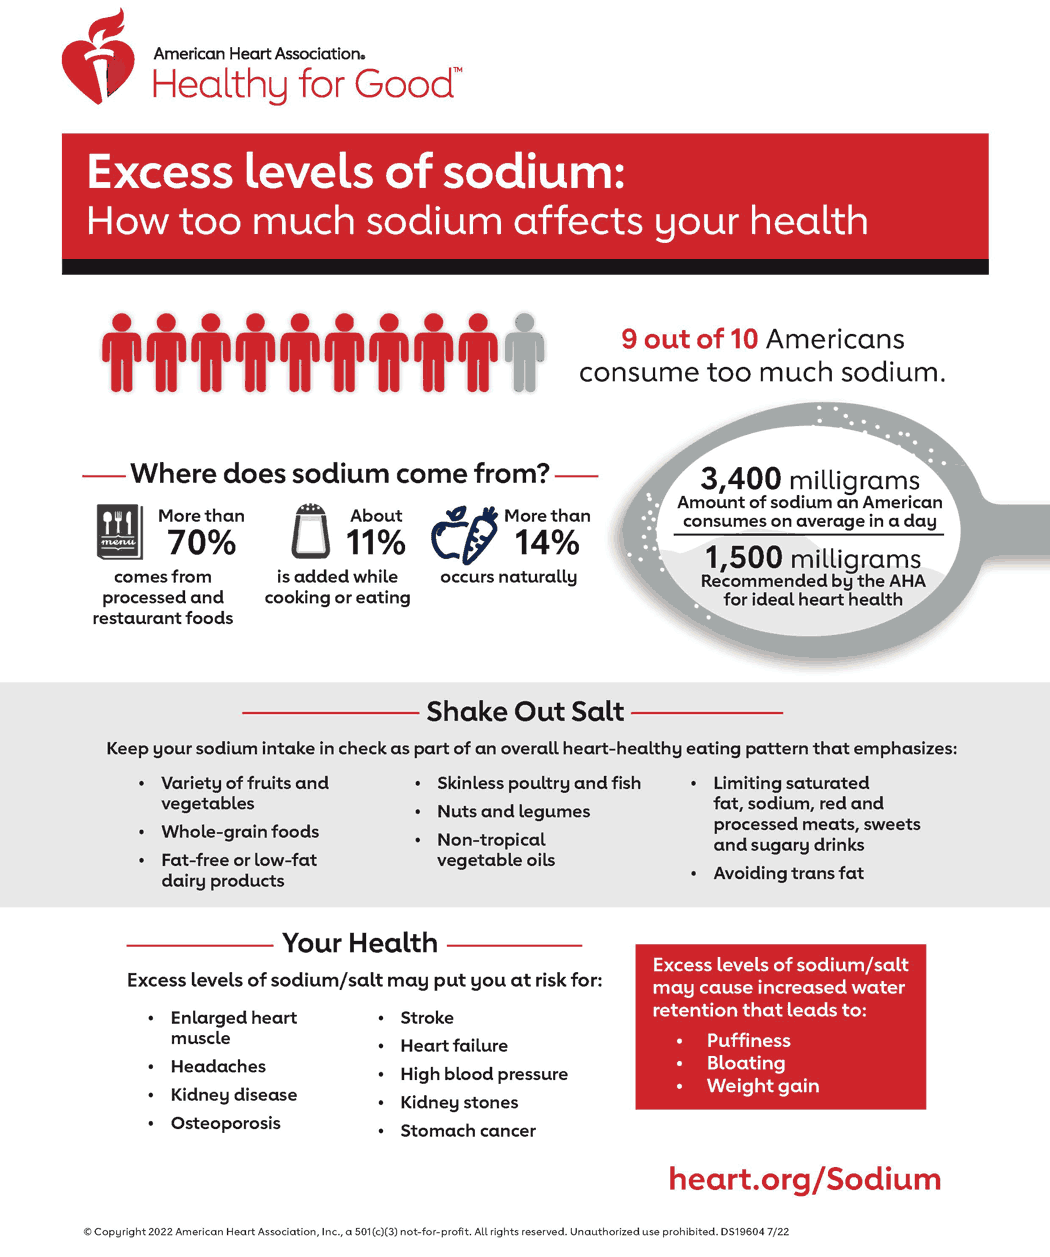 Sodium intake and stroke risk